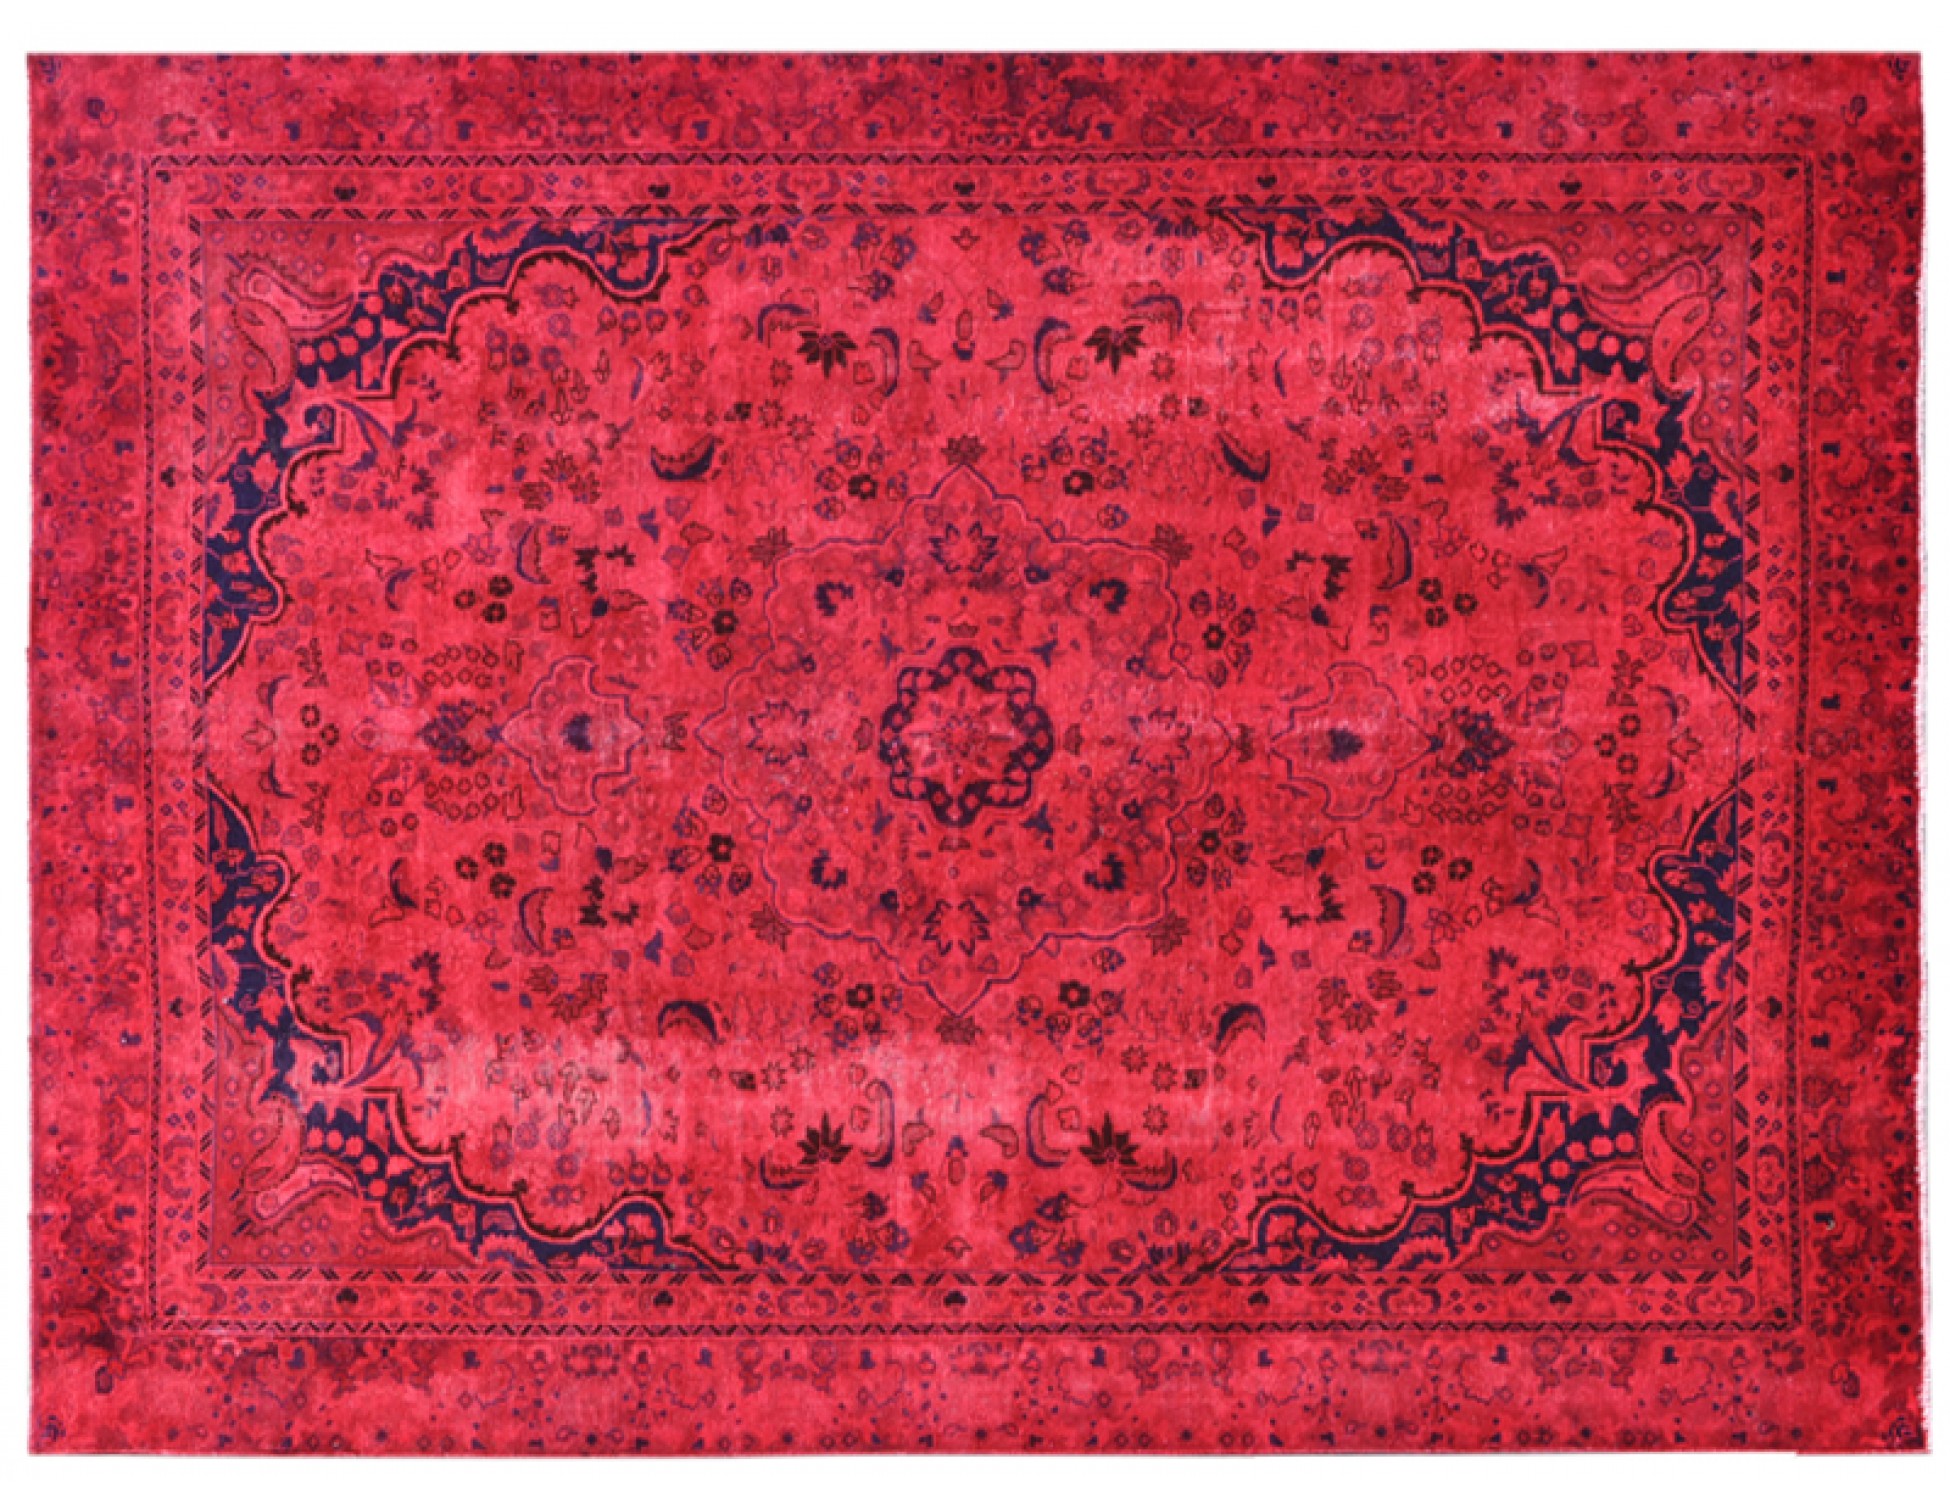  Vintage Tapis  rouge <br/>343 x 258 cm